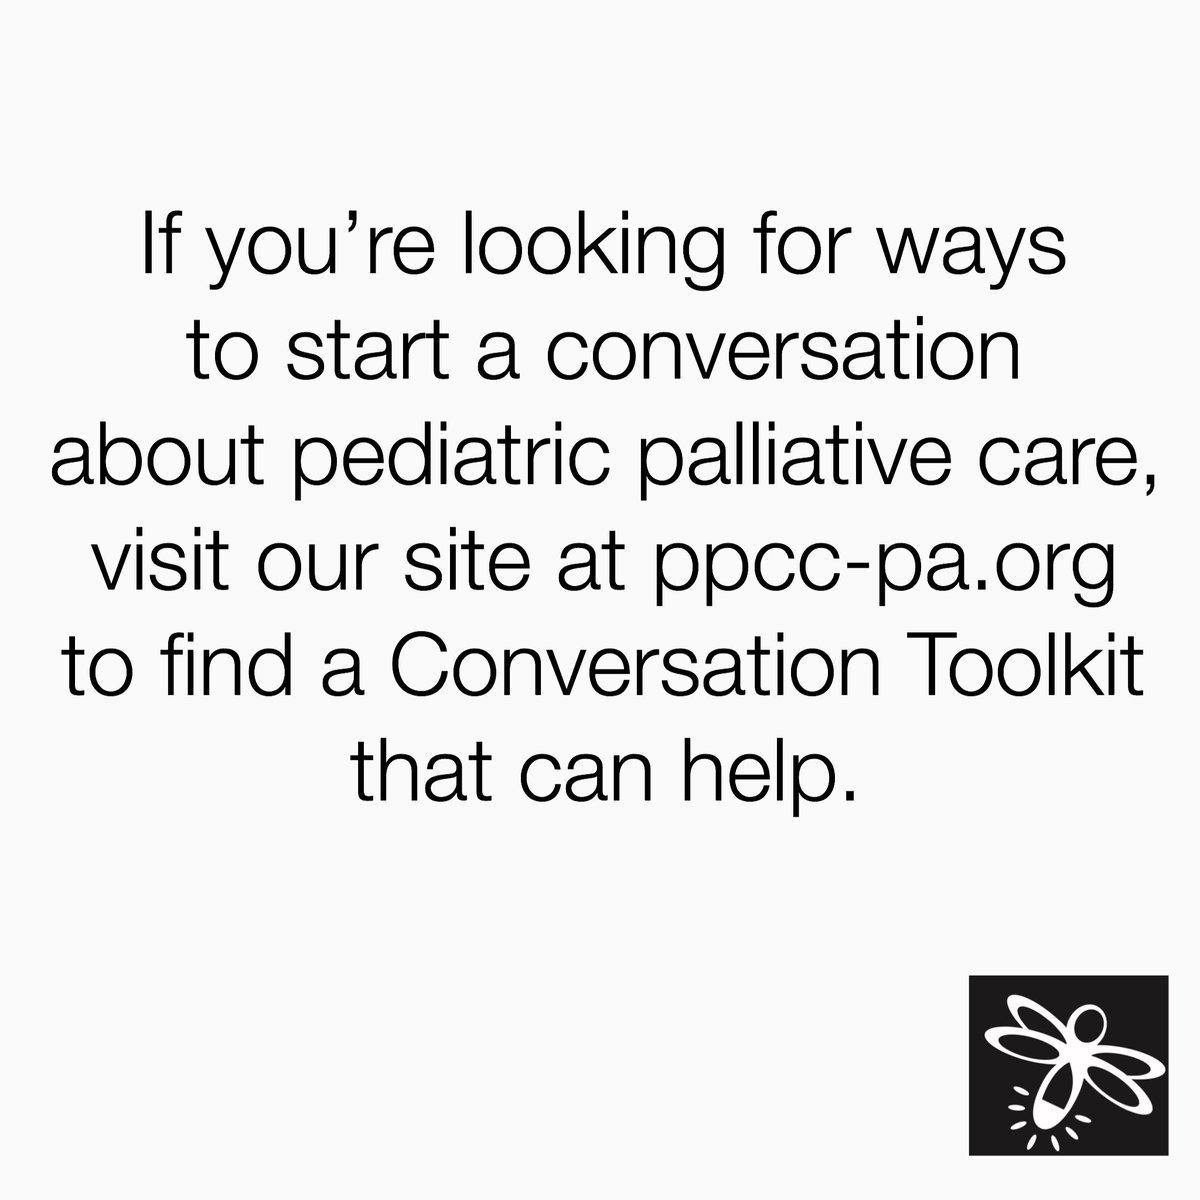 We have tools that can help. 
 #nonprofit #helpingothers #palliativecare #pediatricpalliativecarecoalition #ppcc